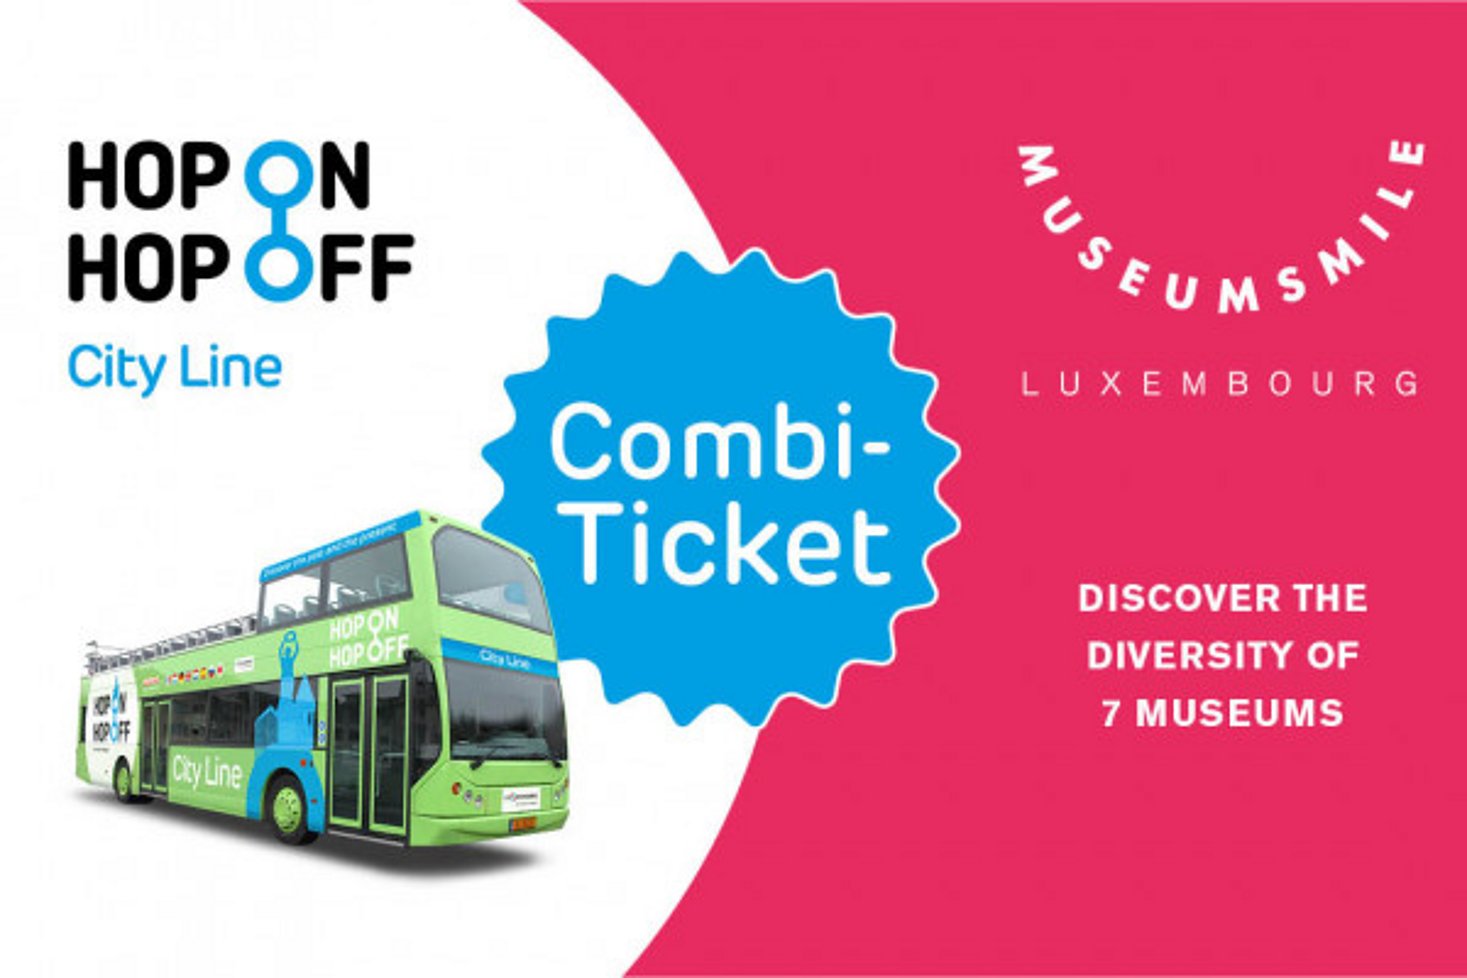 Kombi Ticket Hop On Hop Off City Line + die 7 Museen der Stadt Luxemburg